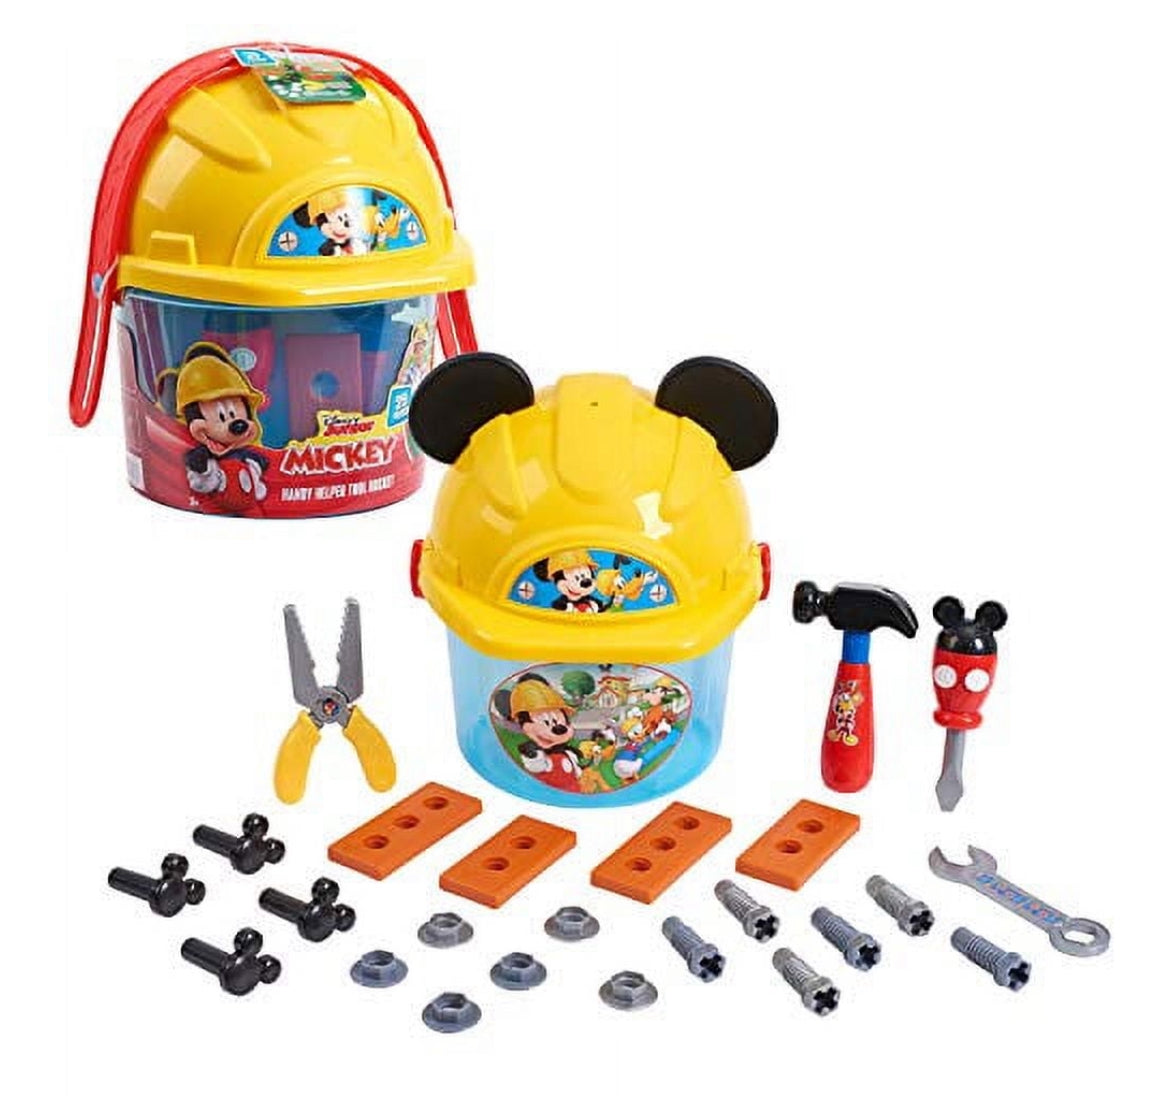 Disney Junior Mickey Mouse Handy Helper Tool Bucket Construction Role Play Set, 25-pieces